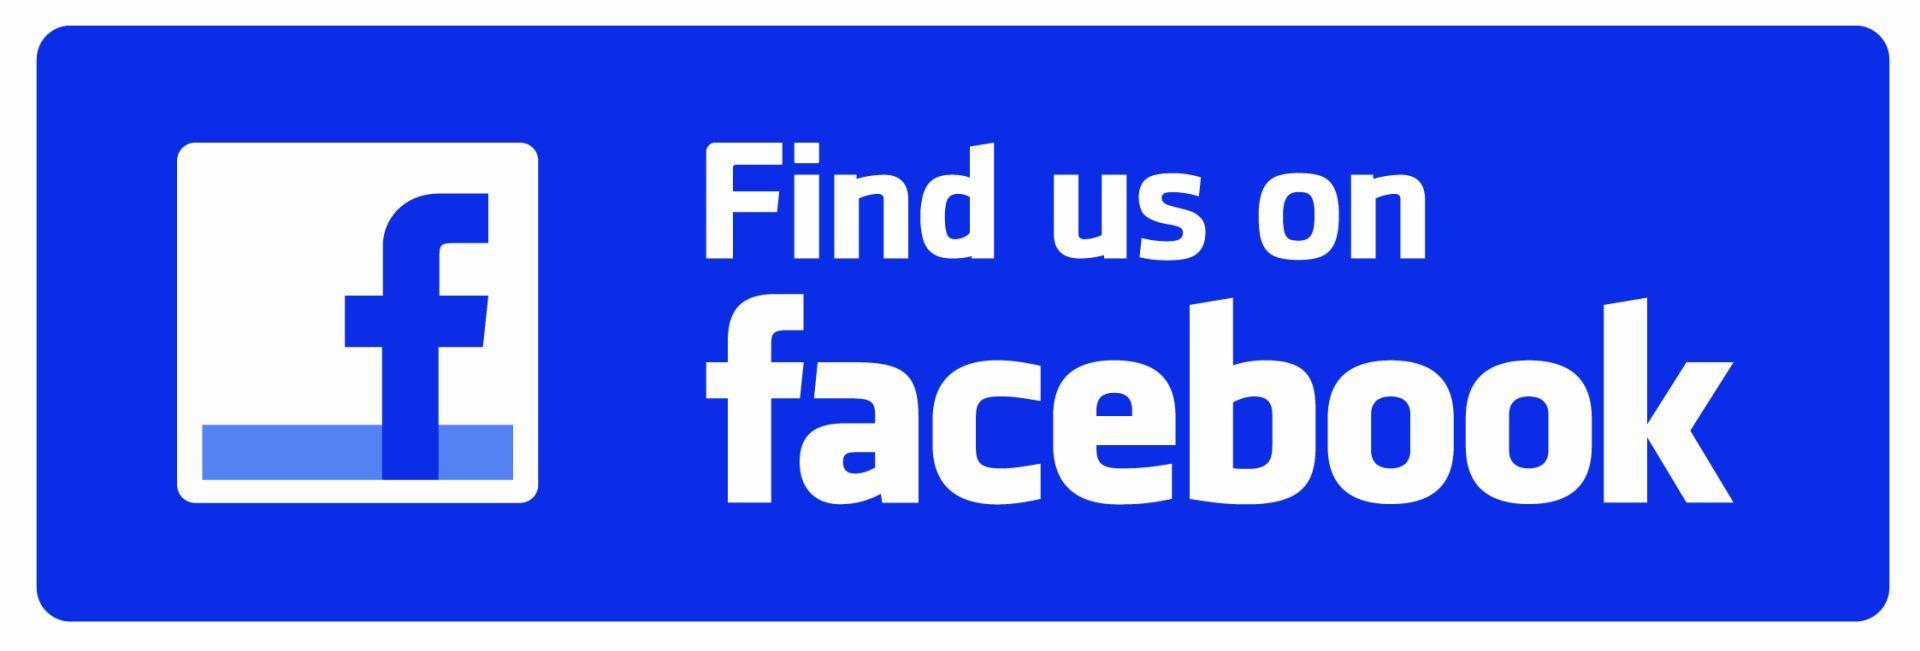 Visit Us On Facebook Logo - Contact Us | Florida School Boards Association